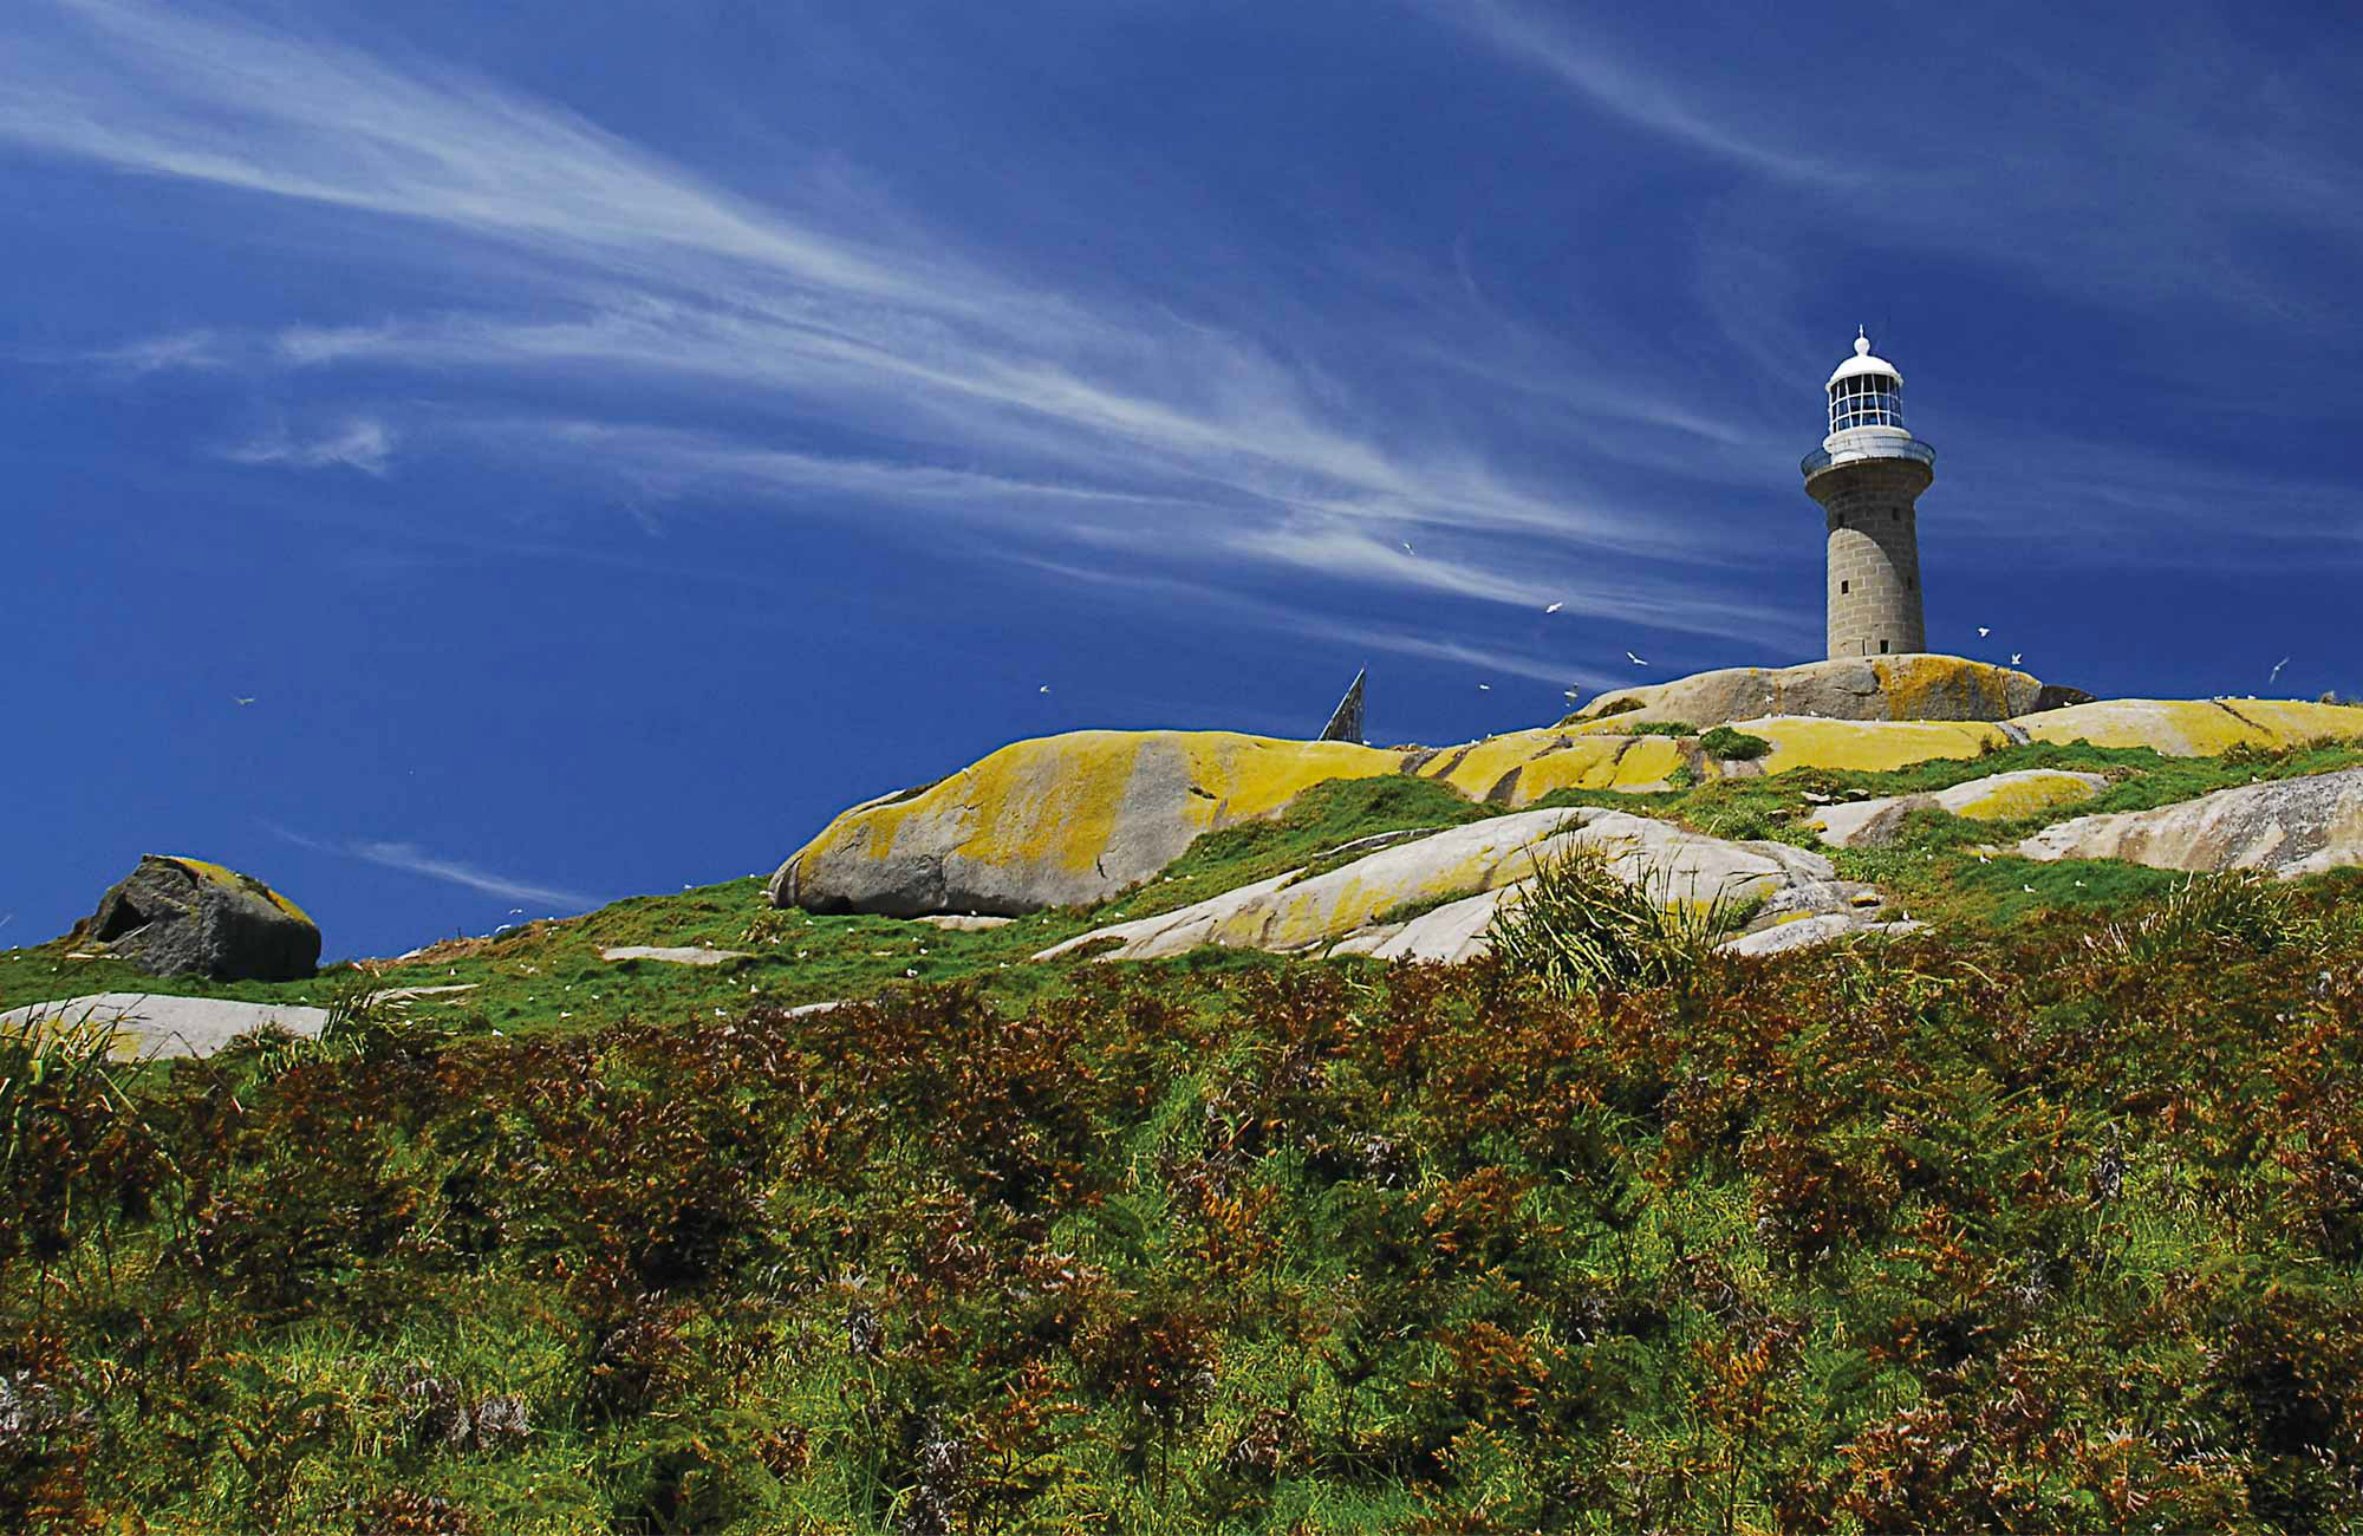 montague island lighthouse tour